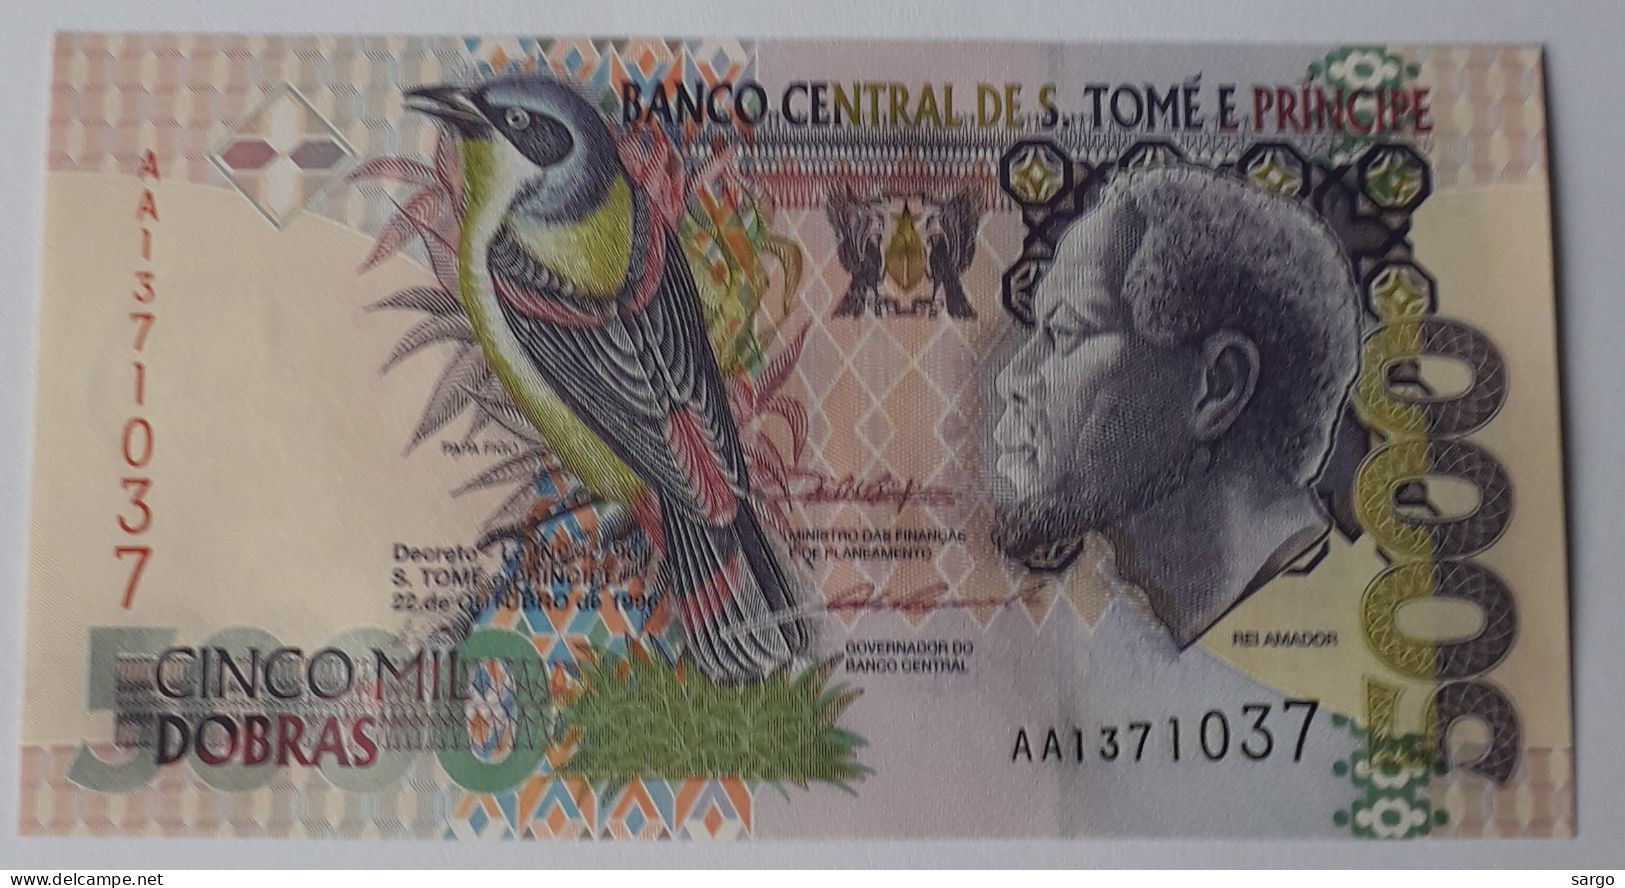 SAINT THOMAS AND PRINCIPE  - 5.000 DOLLARS - P 65  (1996) - UNC -  BANKNOTES - PAPER MONEY - São Tomé U. Príncipe